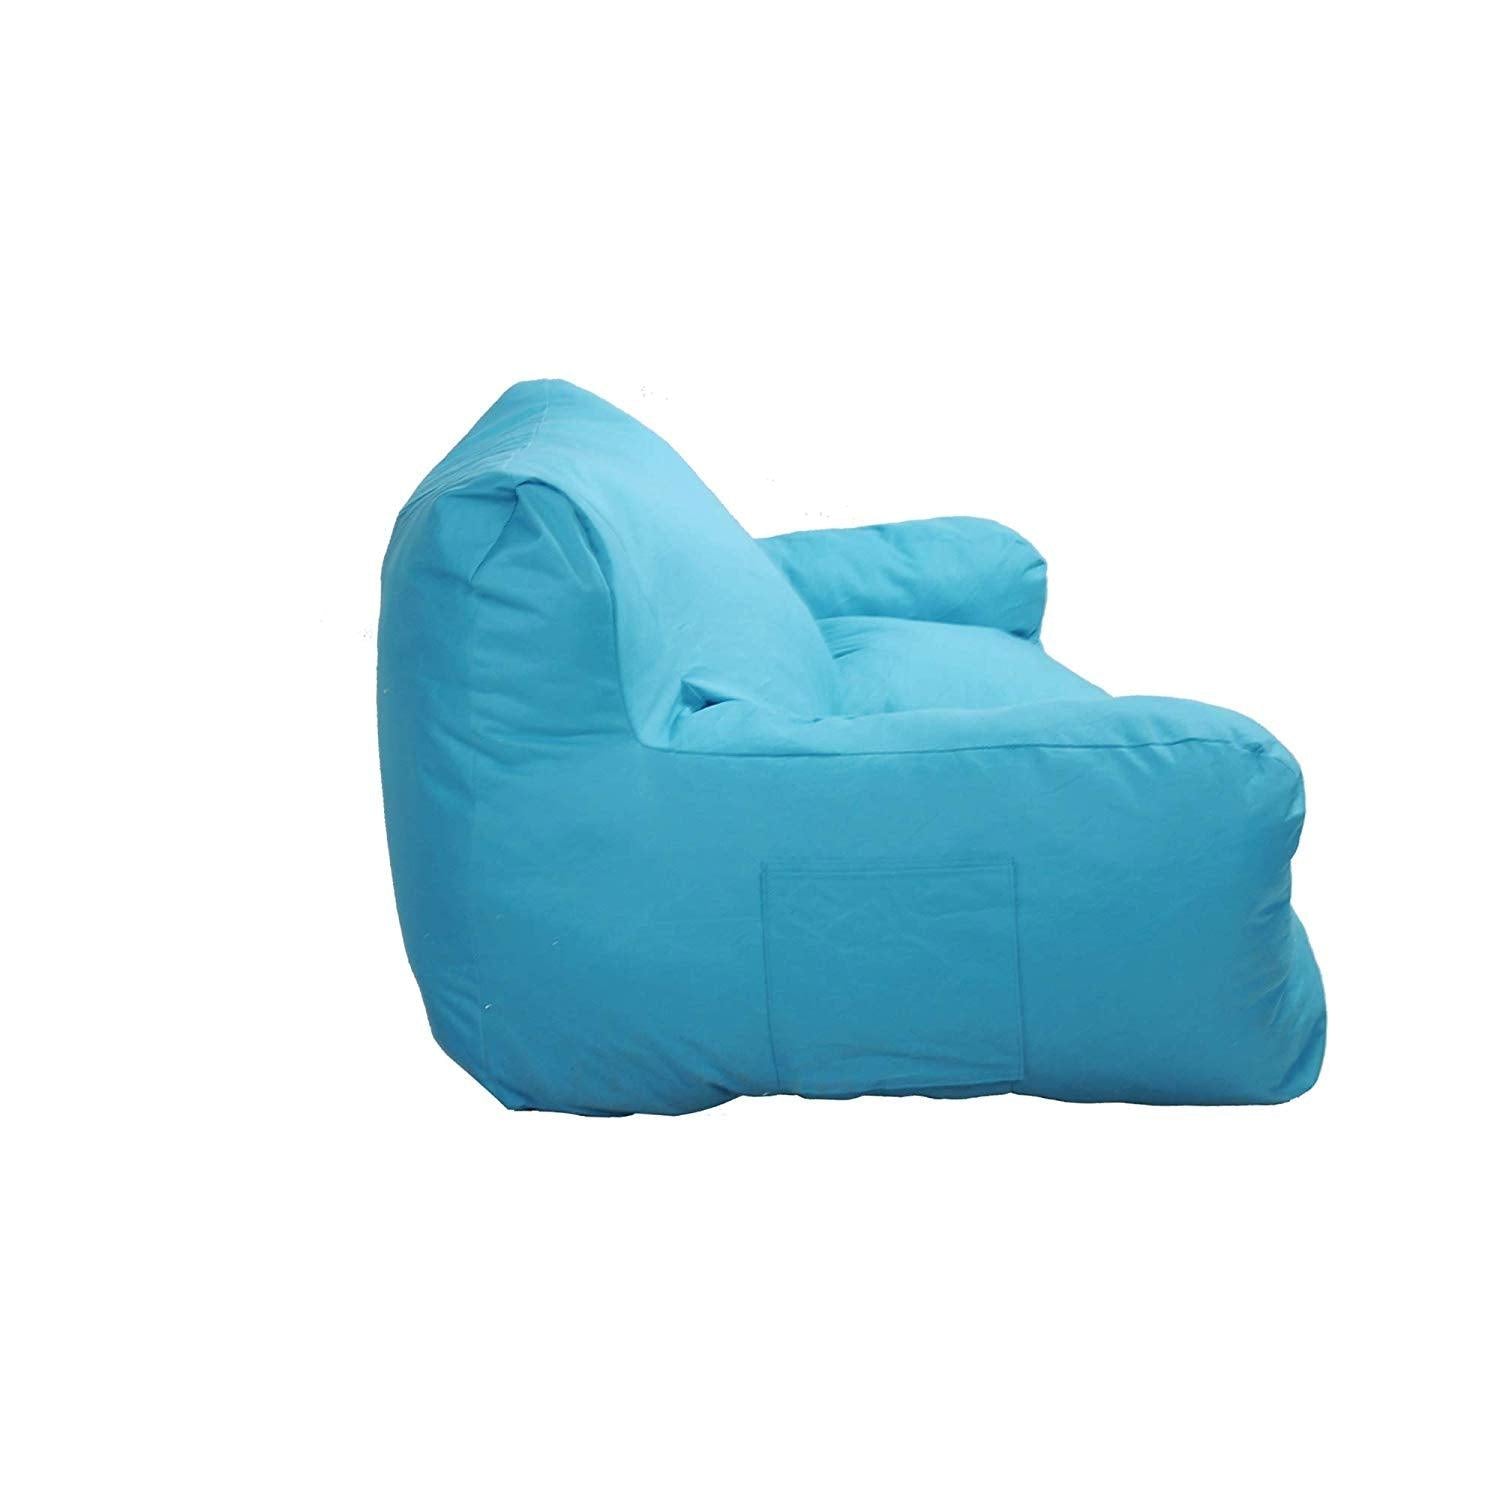 Bosonshop Bean Bag Chair Self-Rebound Sponge Double Child Seat 51" x 32" x 18" Blue